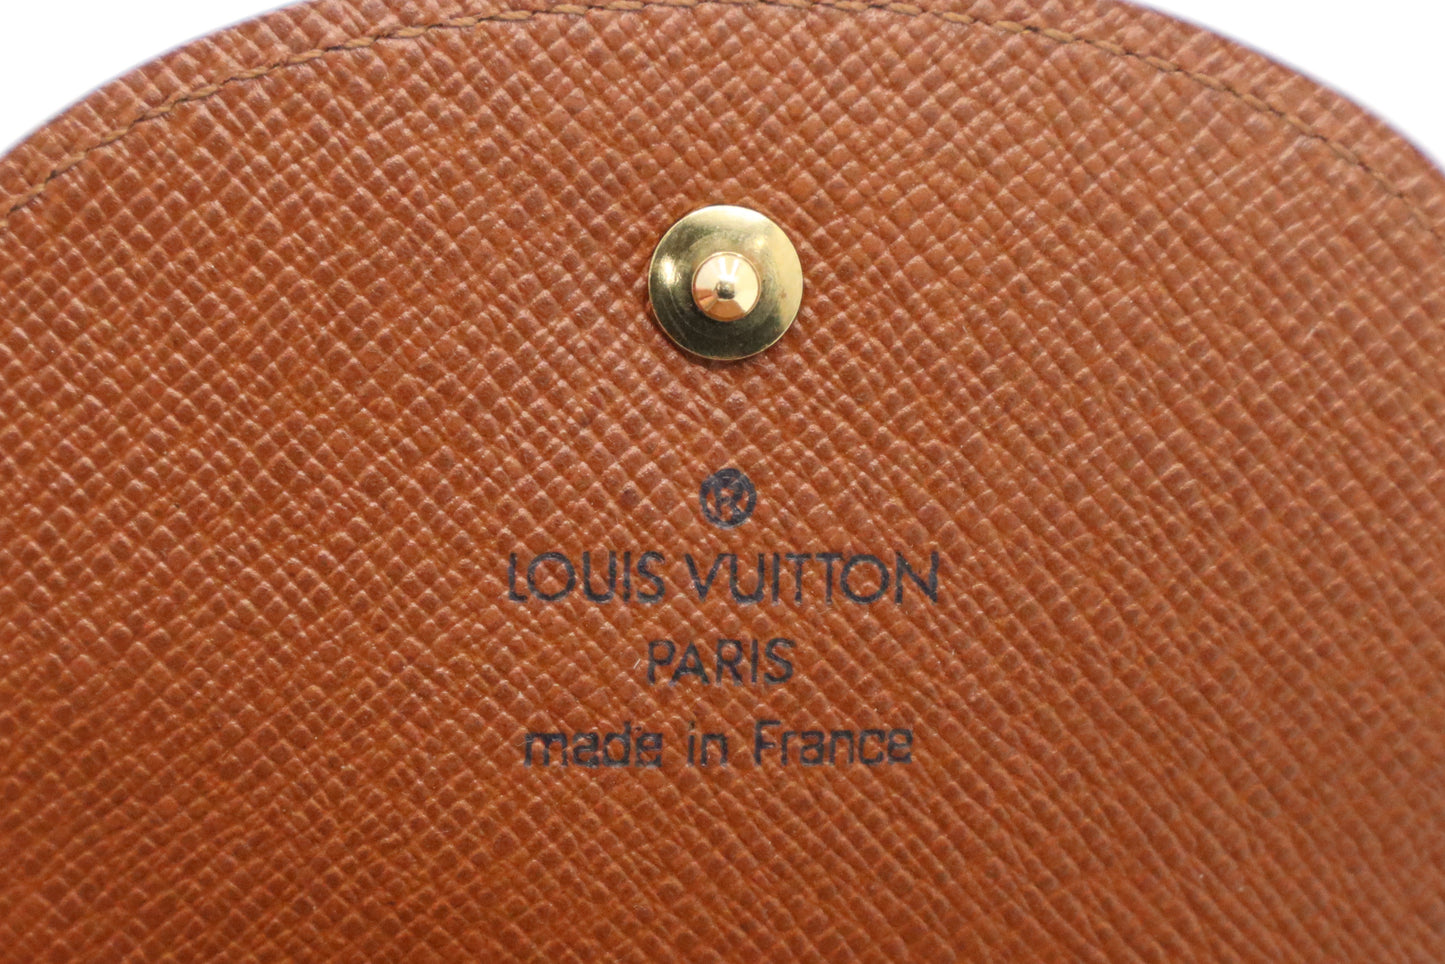 Louis Vuitton Porte Monnaie Gousset in Monogram Canvas